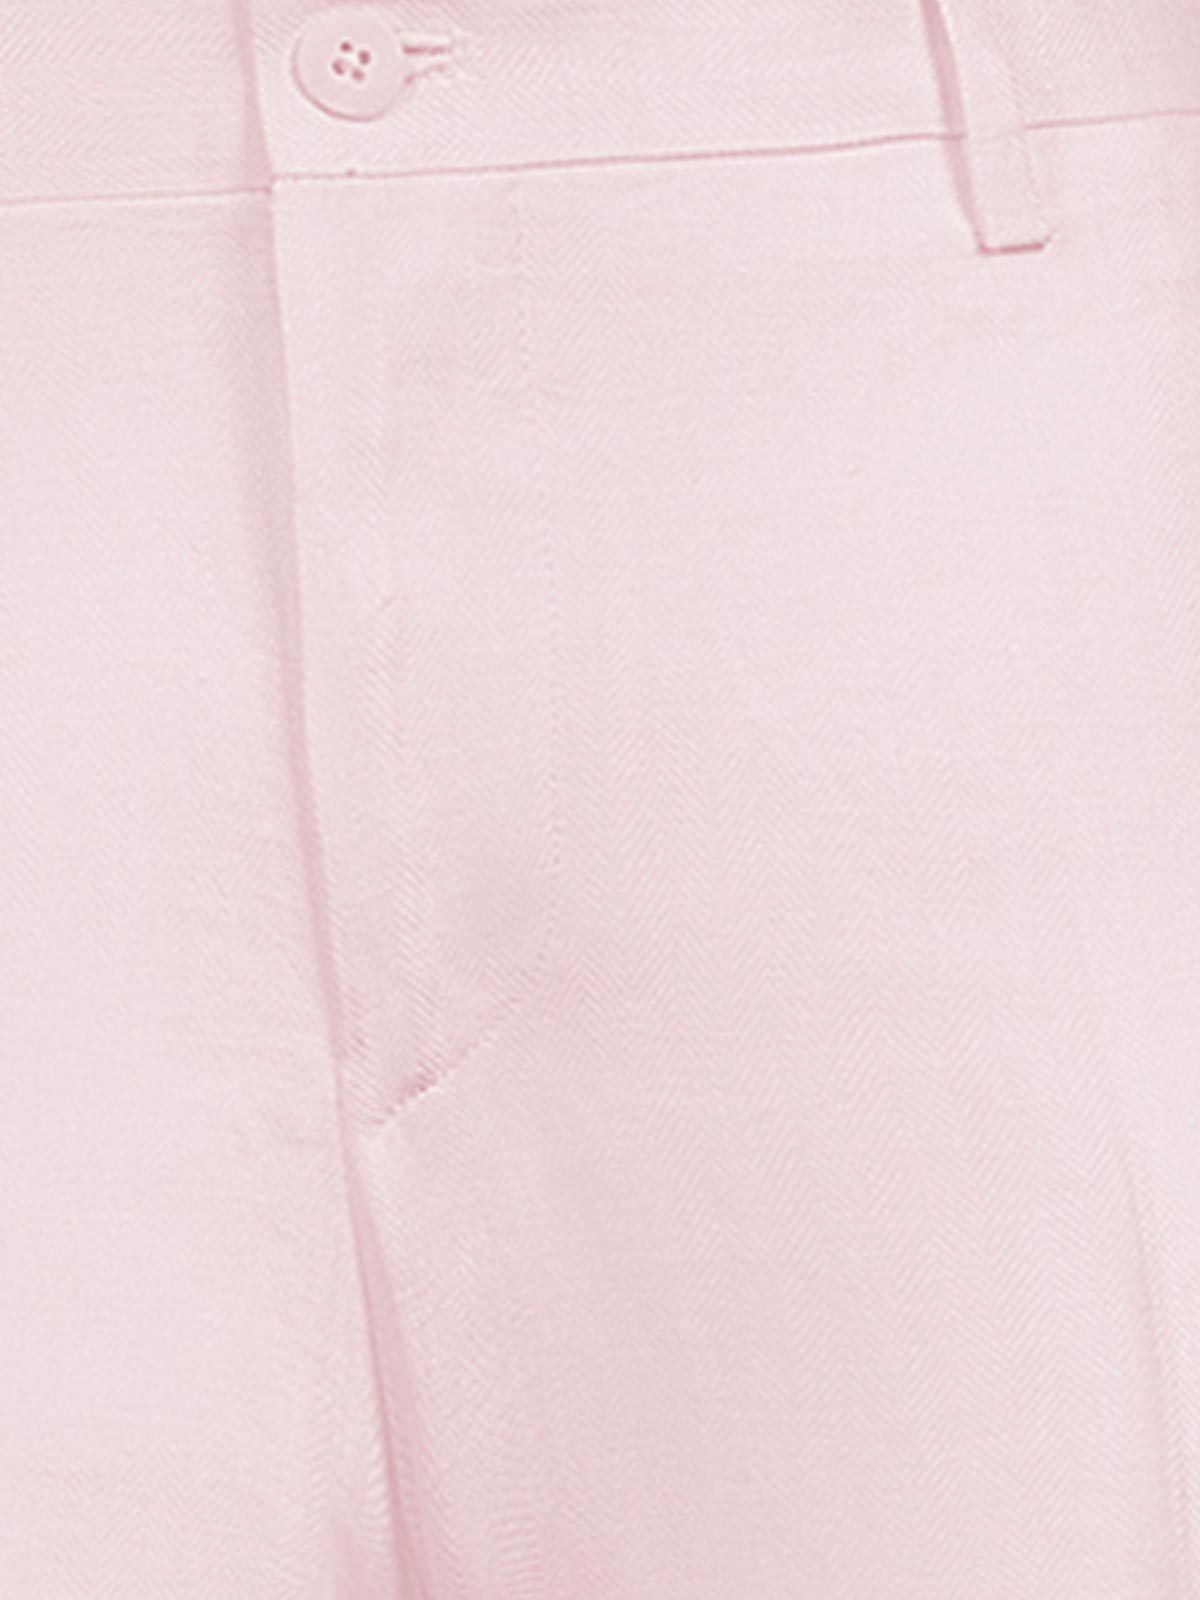 Pantalone New Capri  for woman 100% Capri pink linen pant detail